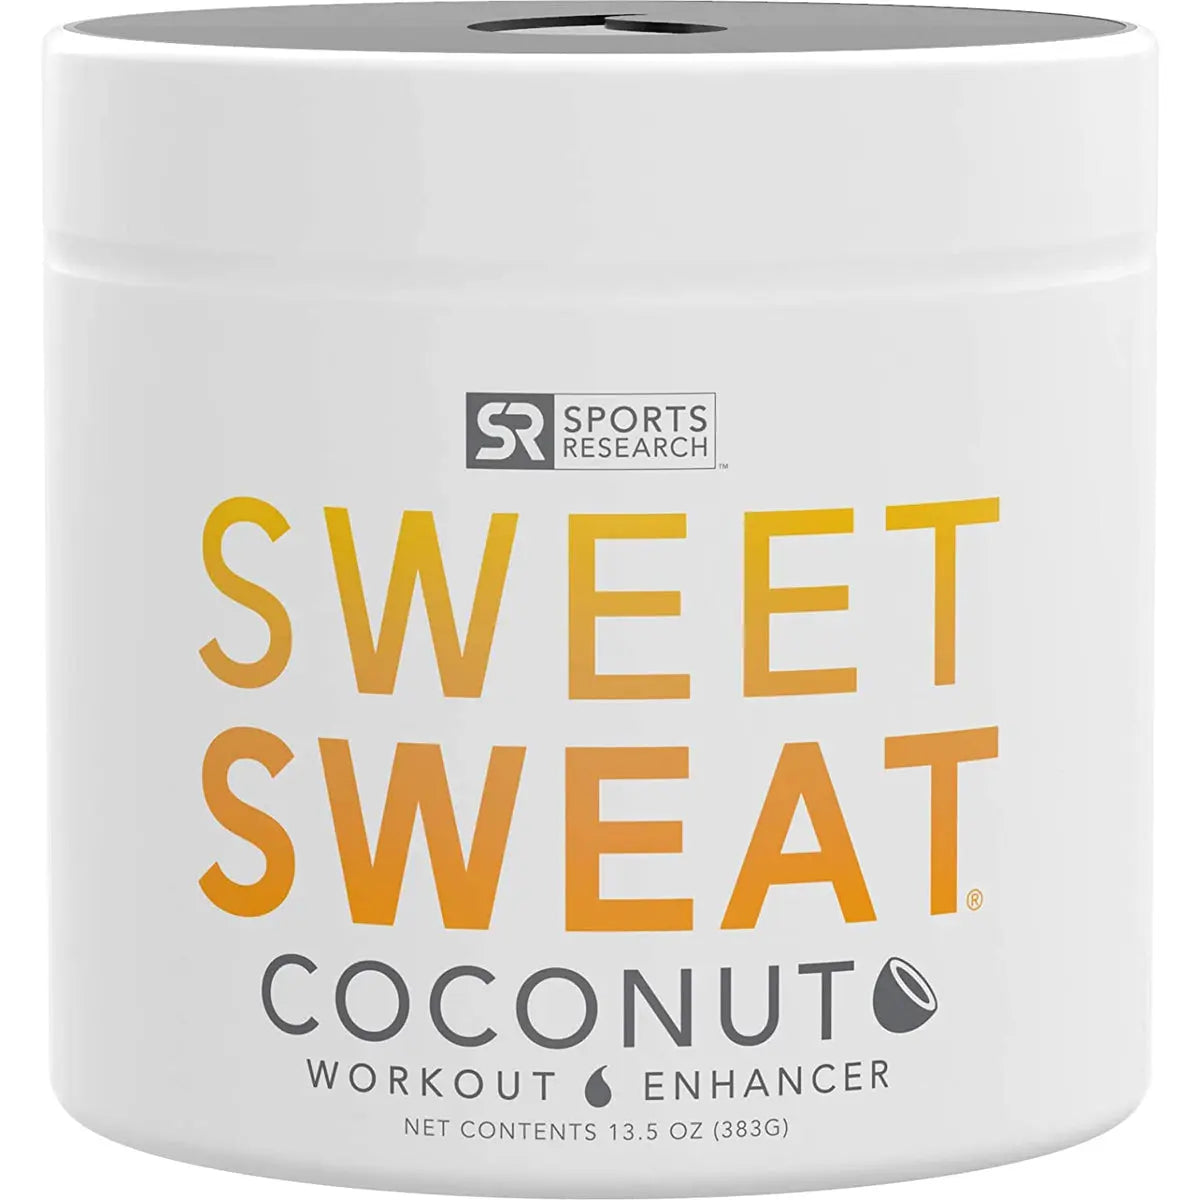 Sports Research 13.5 oz Sweet Sweat Workout Enhancer Gel Sports Research